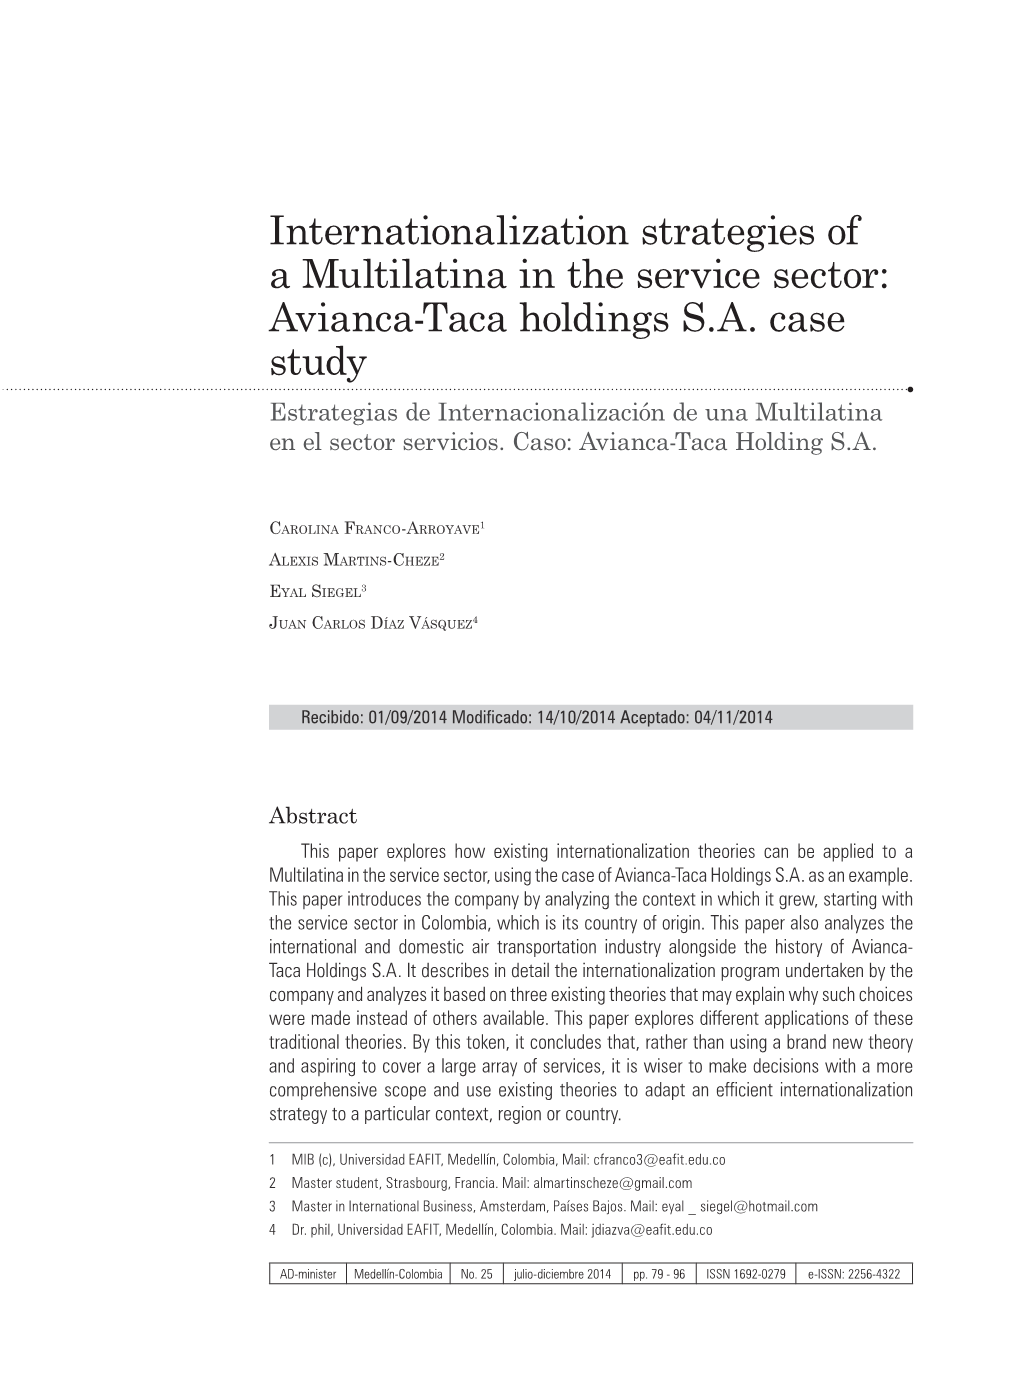 Internationalization Strategies of a Multilatina in the Service Sector: Avianca-Taca Holdings S.A